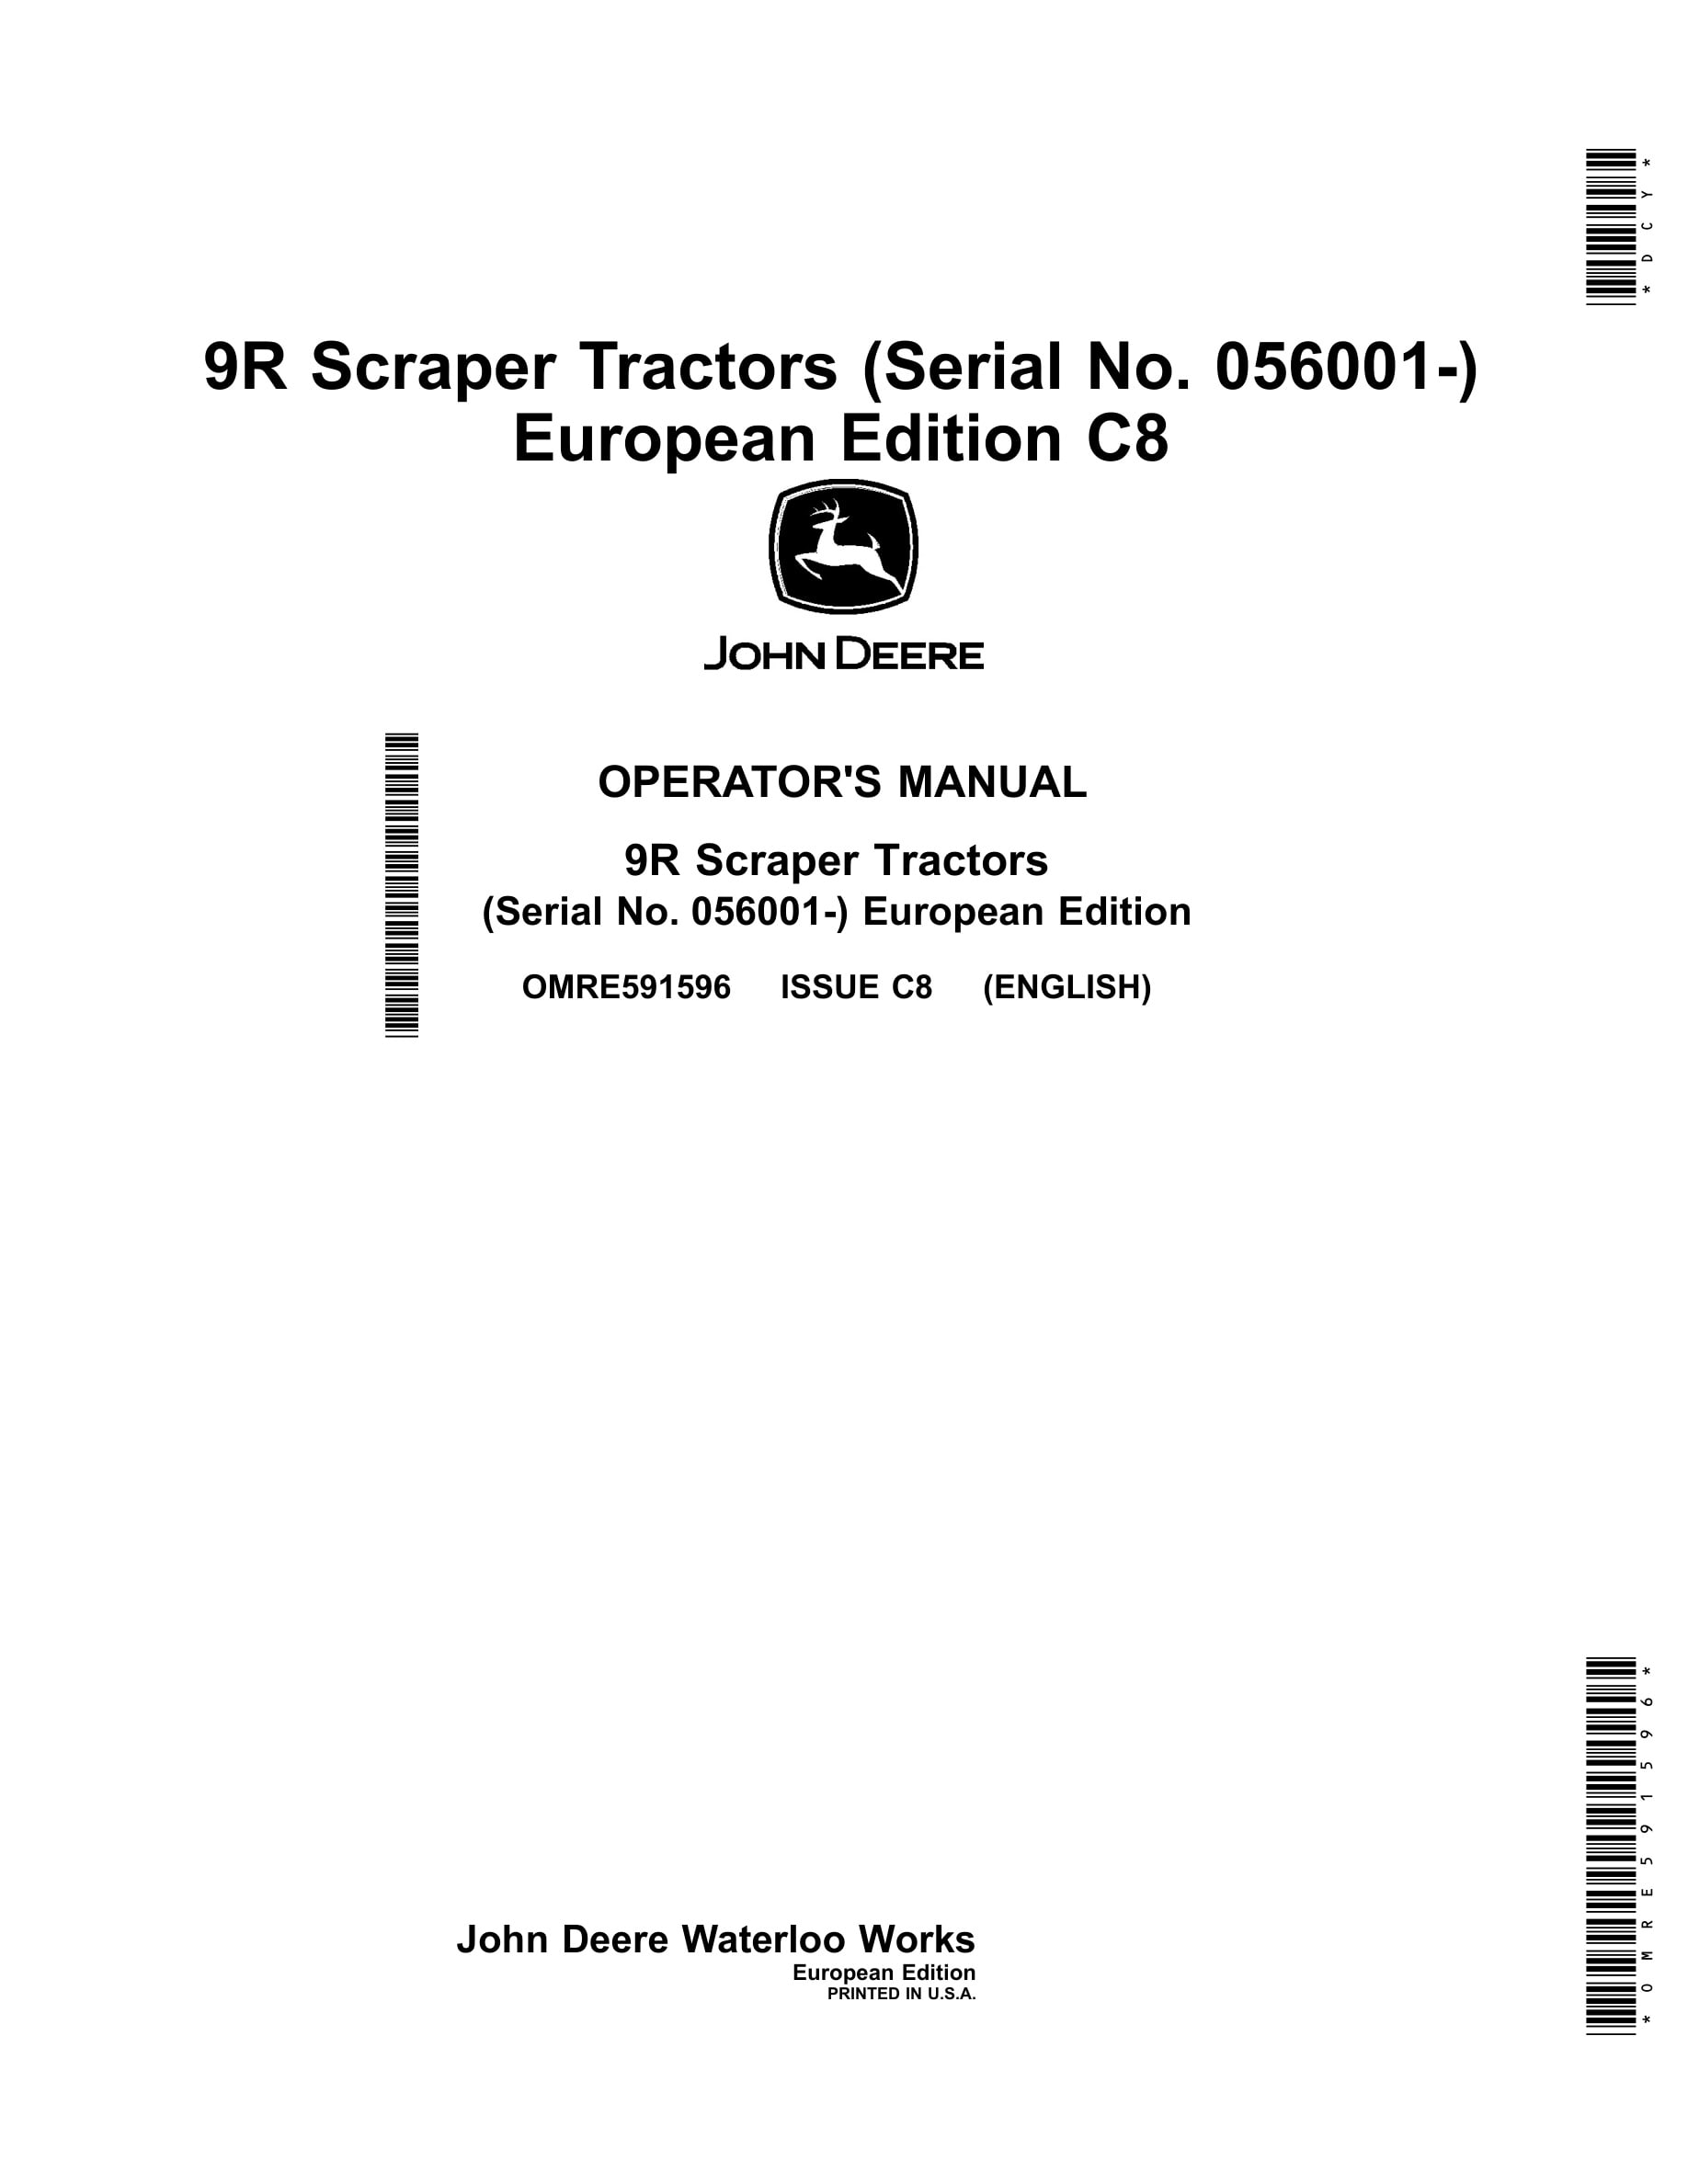 John Deere 9r Scraper Tractors Operator Manuals OMRE591596-1